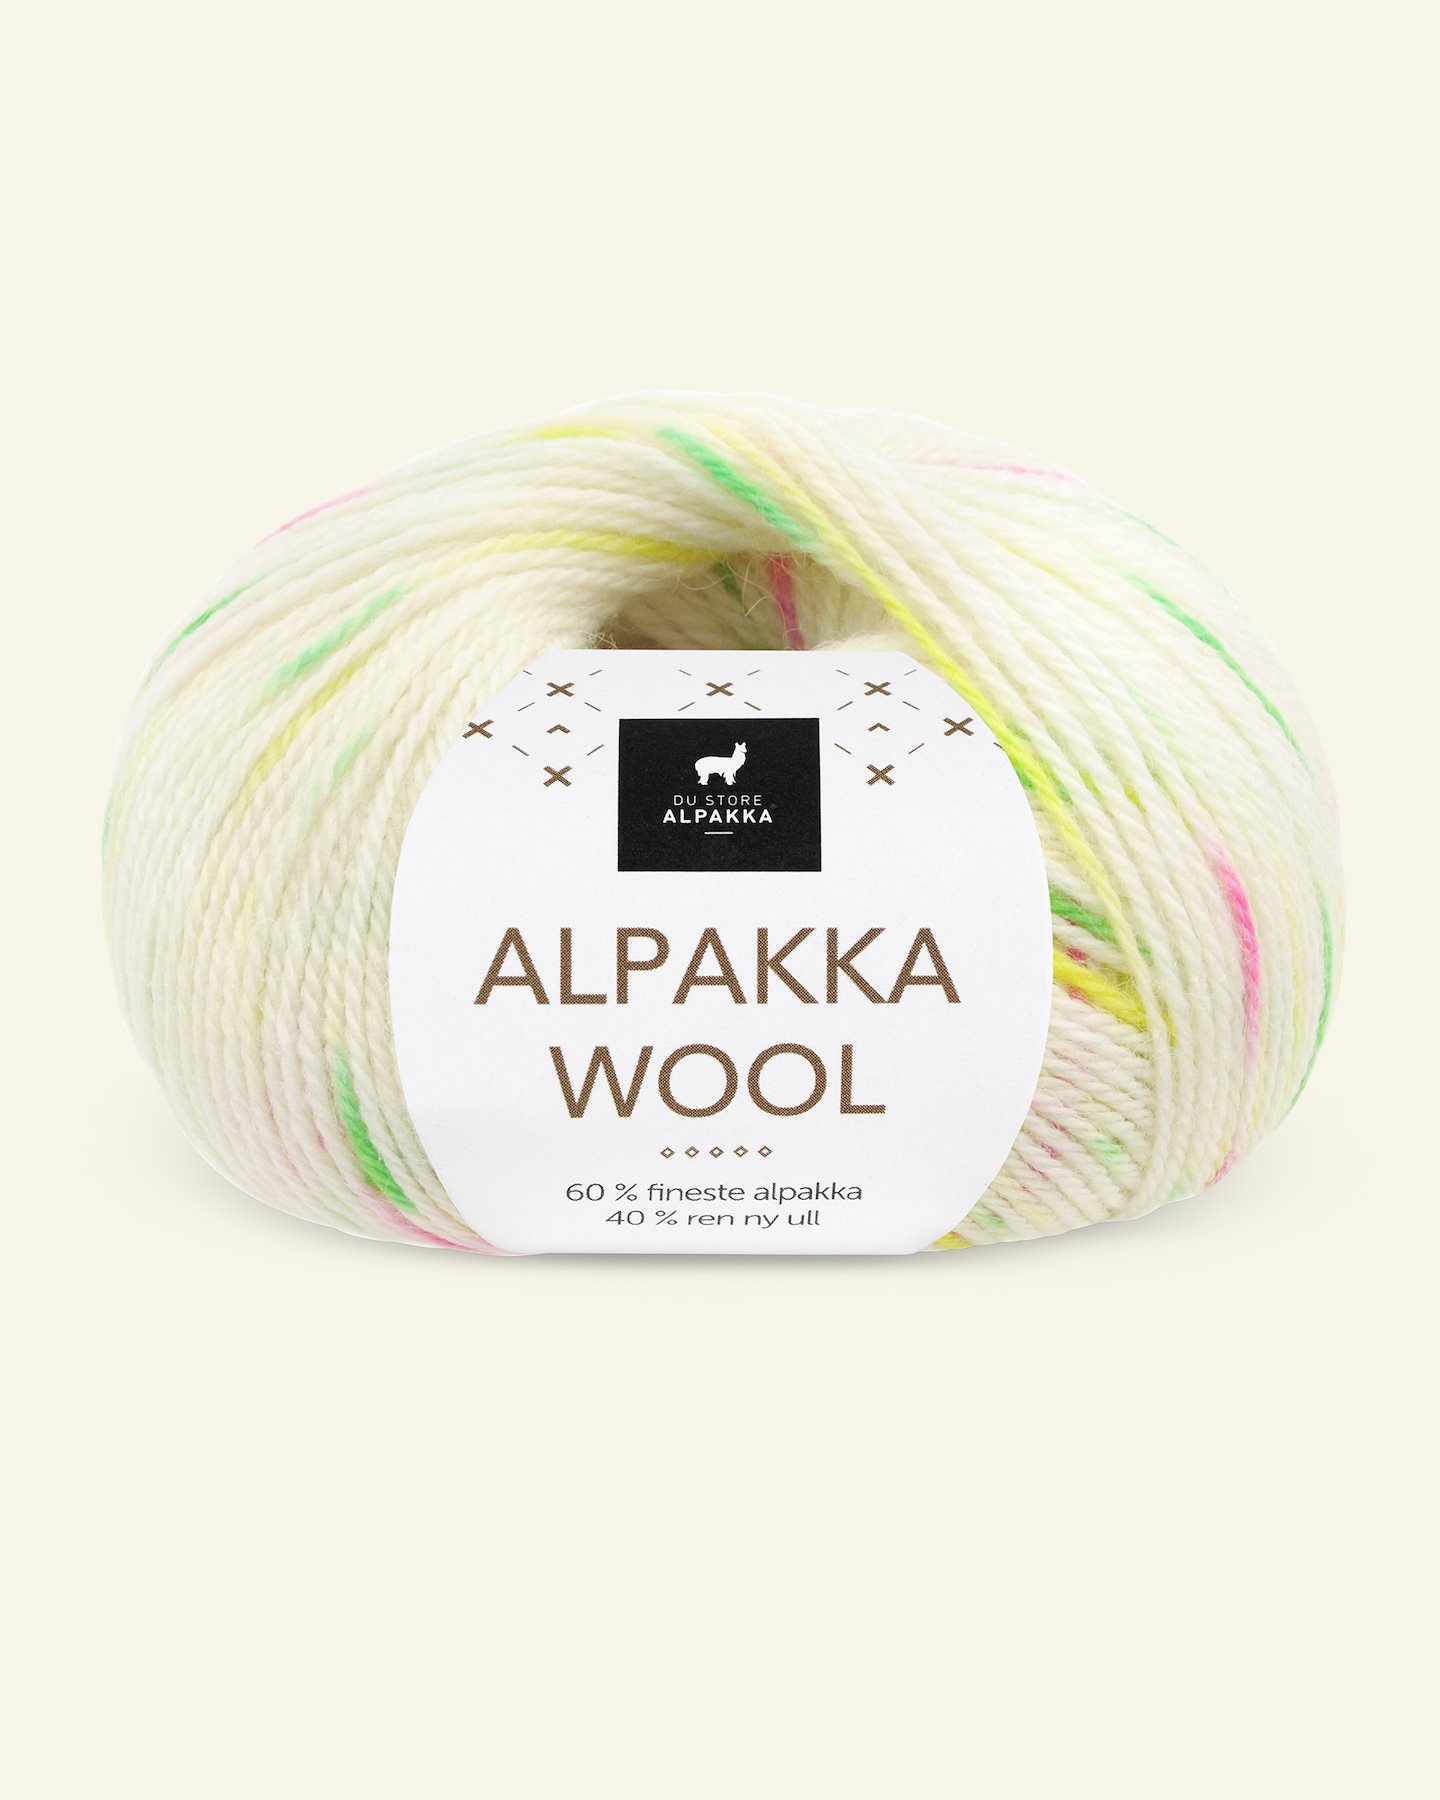 Du Store Alpakka, Alpakka Wool hvid/neon 90001245_pack